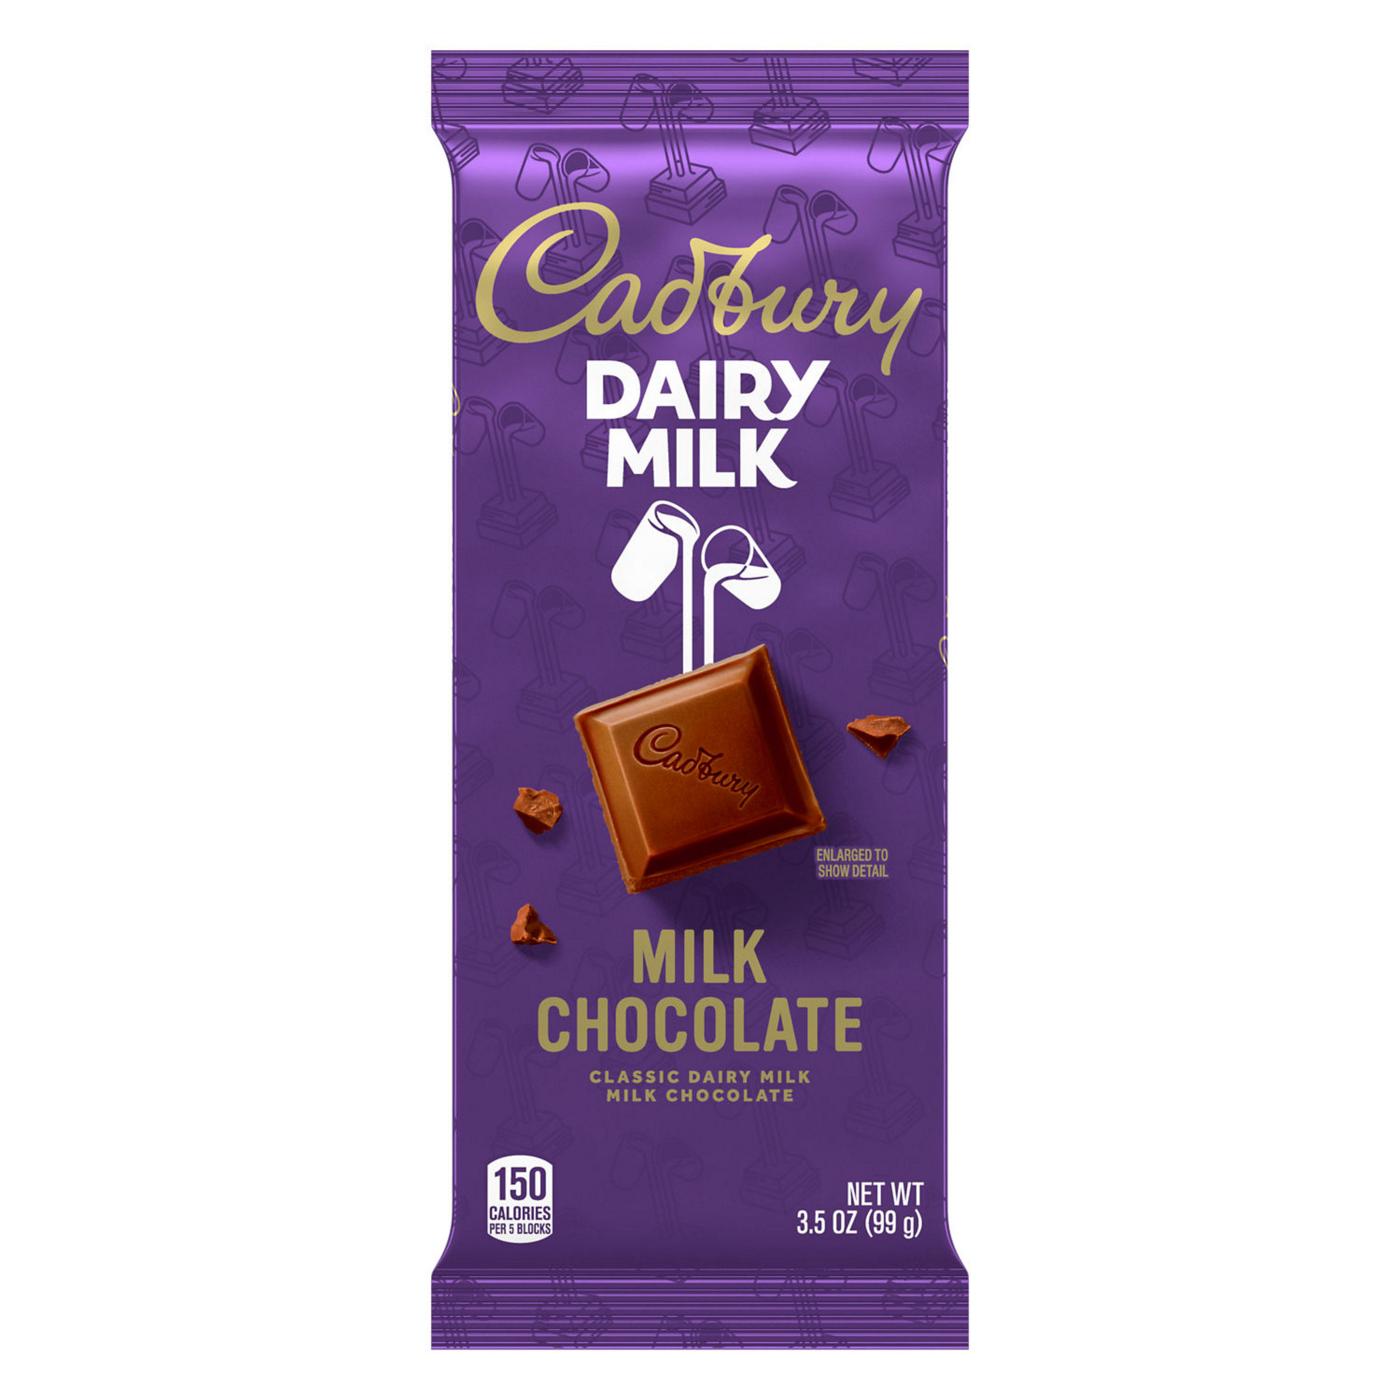 Cadbury Dairy Milk Chocolate Candy Bar; image 1 of 7